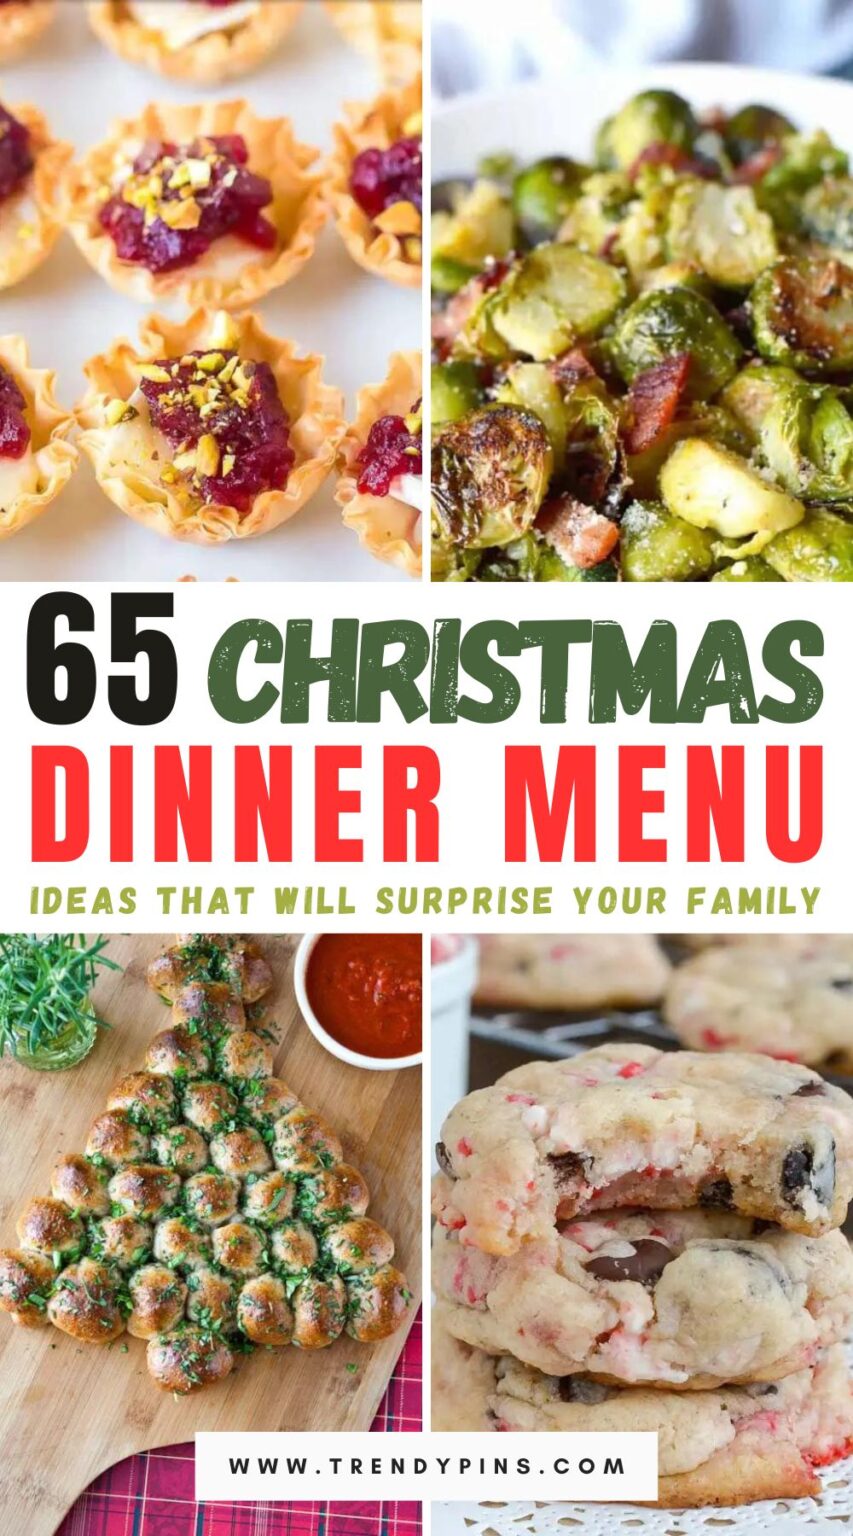 65 Favorite Christmas Dinner Menu Ideas